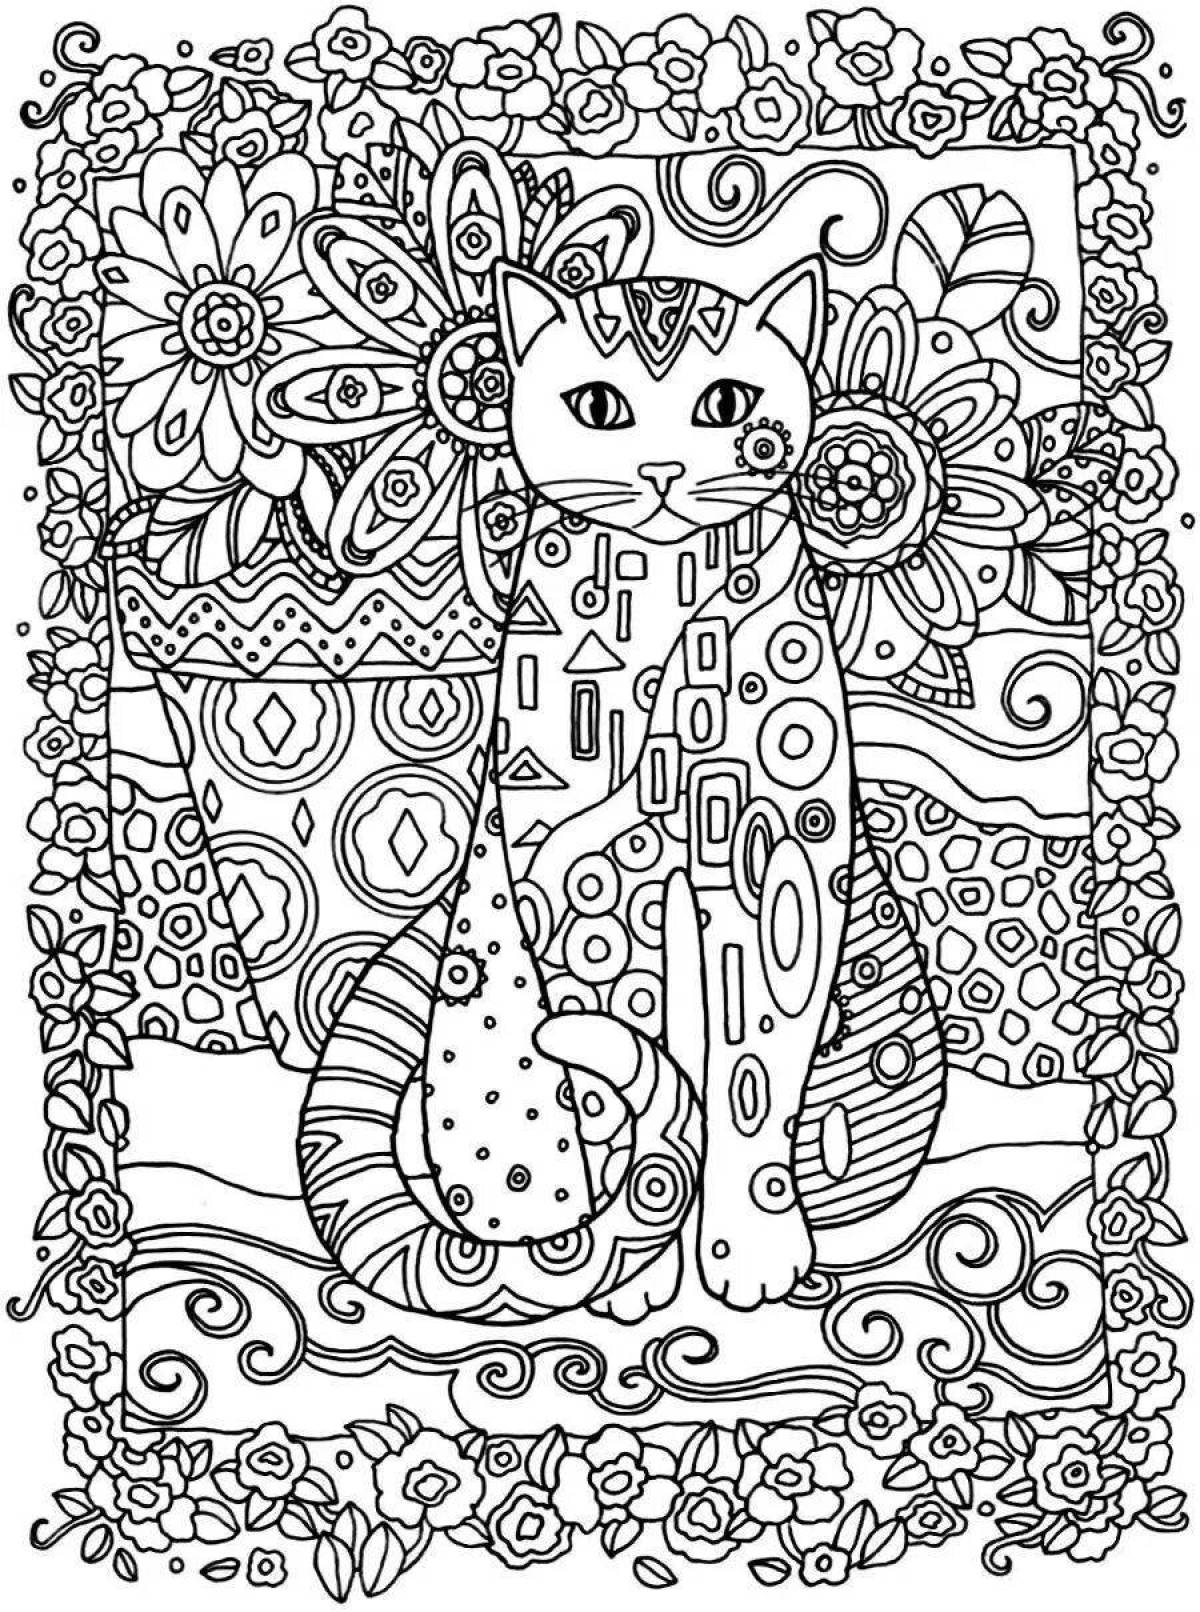 Colorful cat mandala coloring page